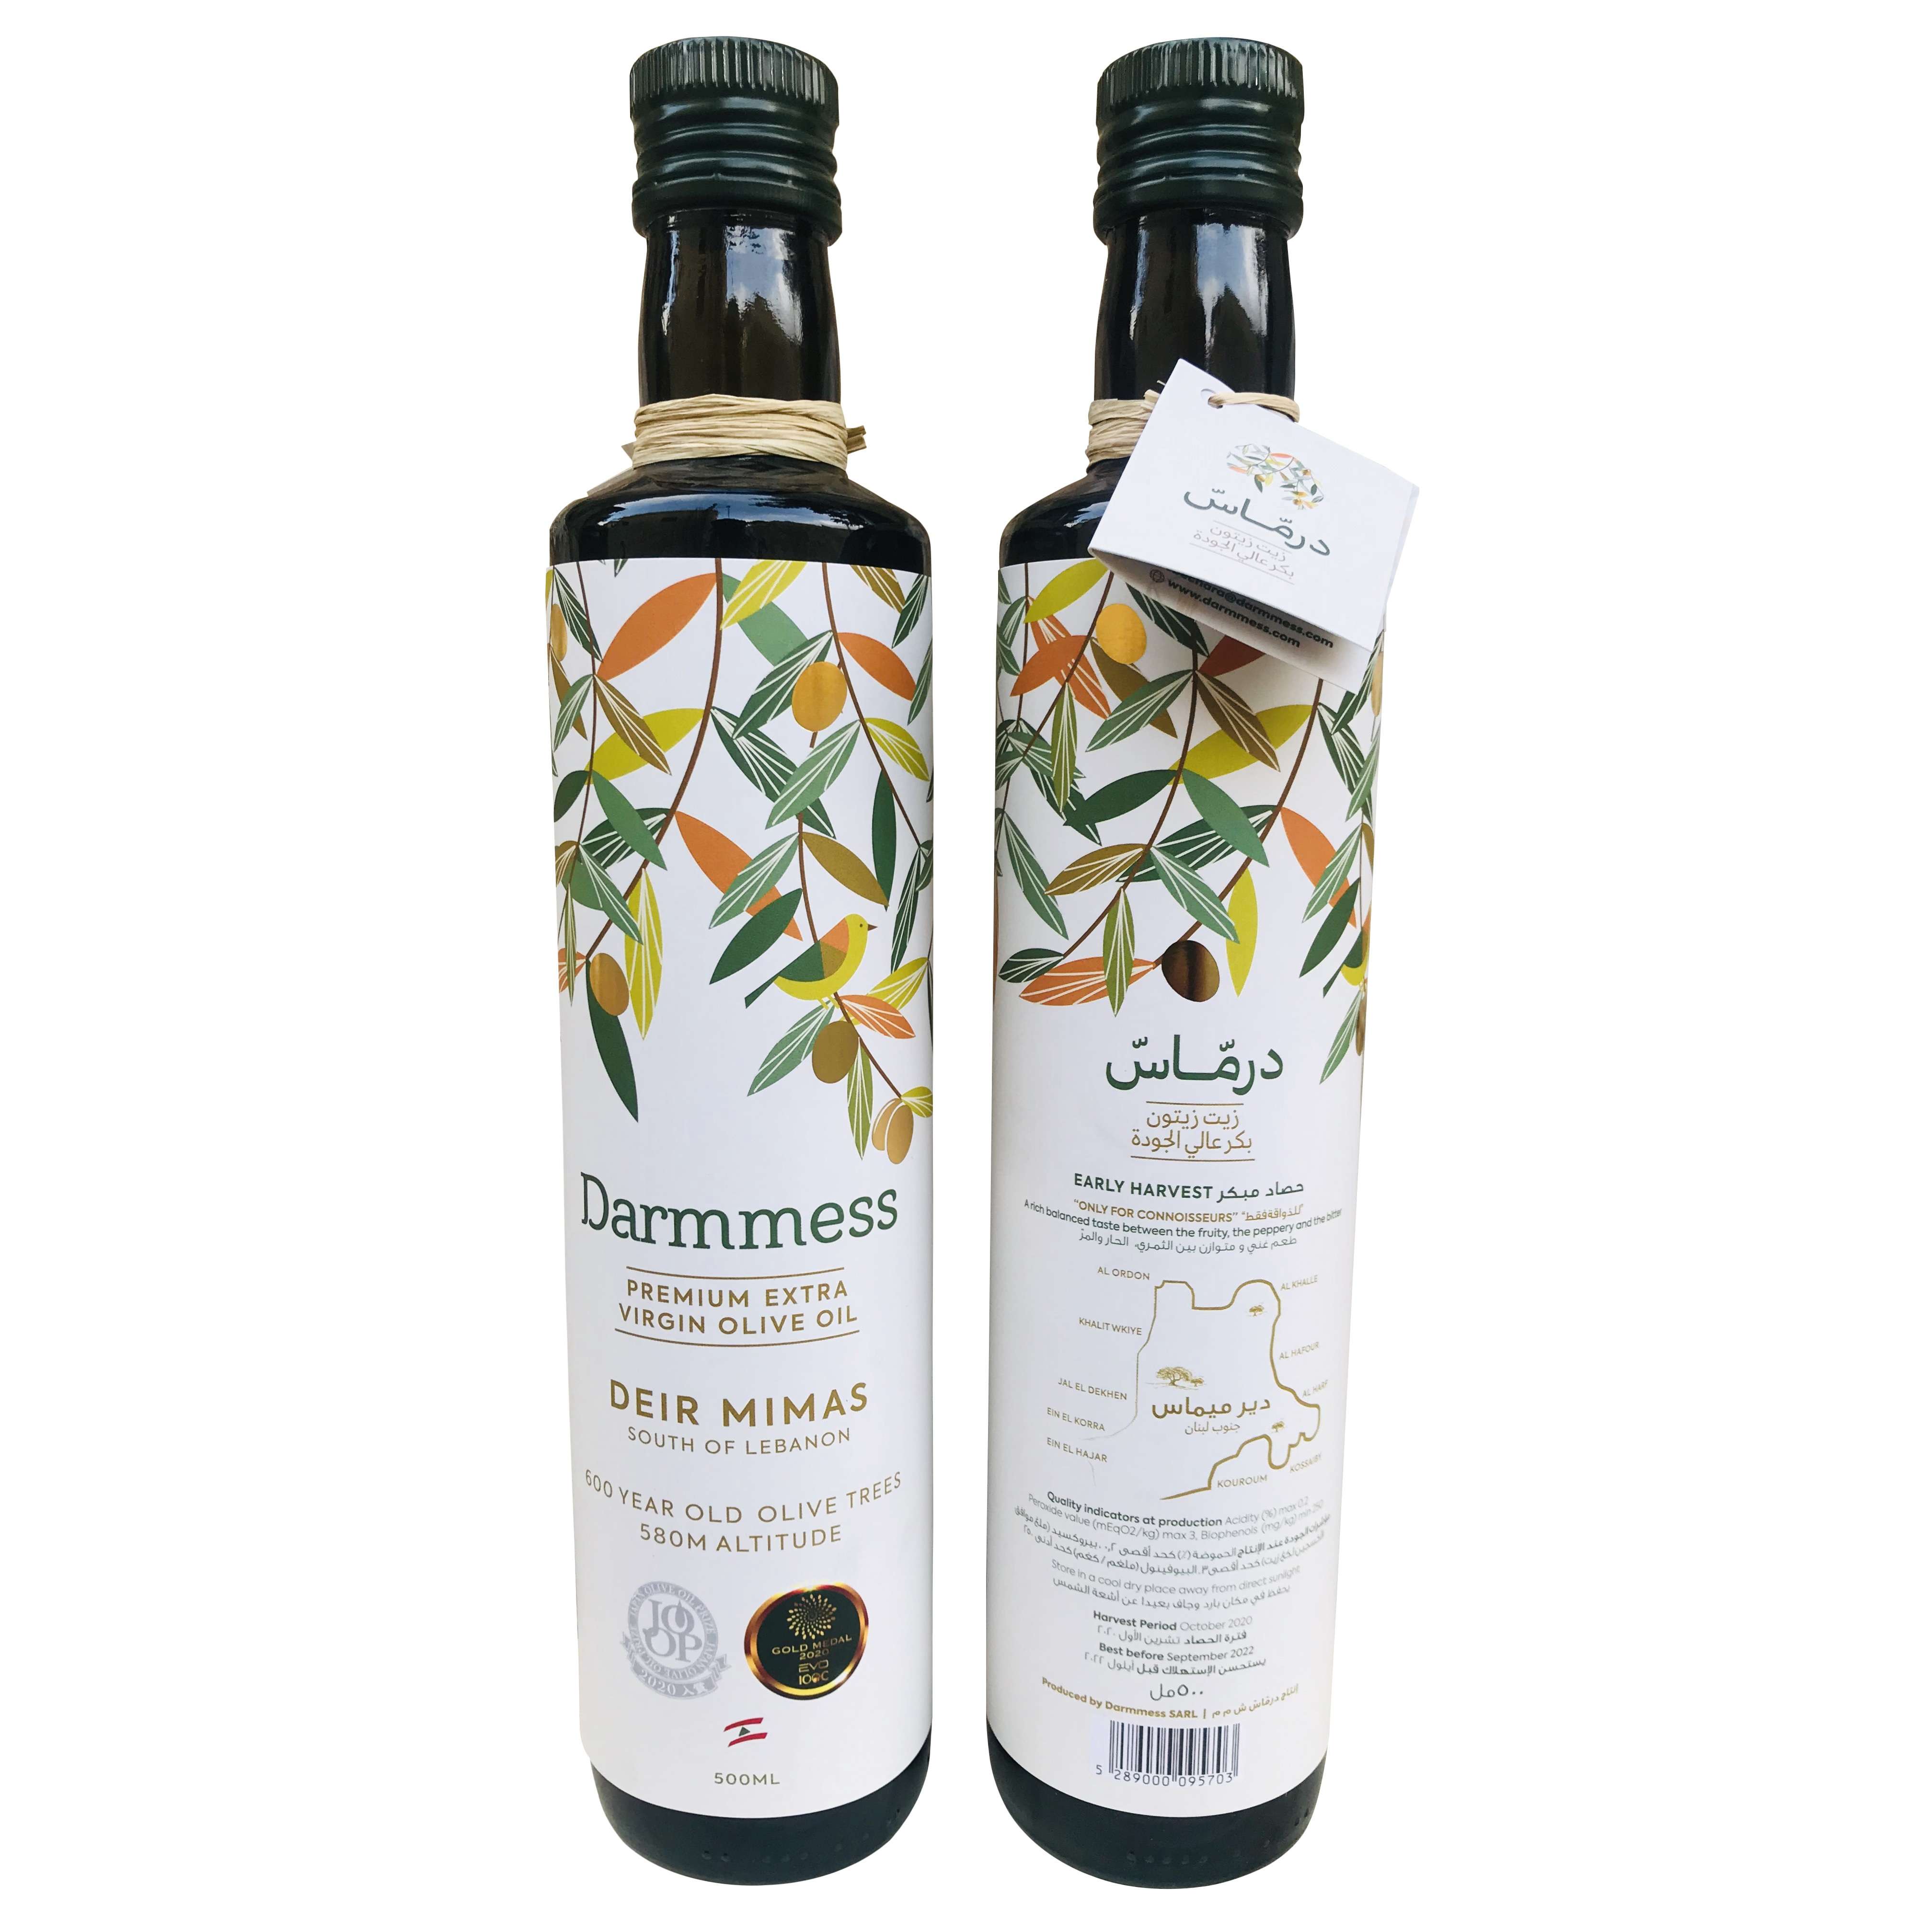 Darmmess Premium Extra Virgin Olive Oil